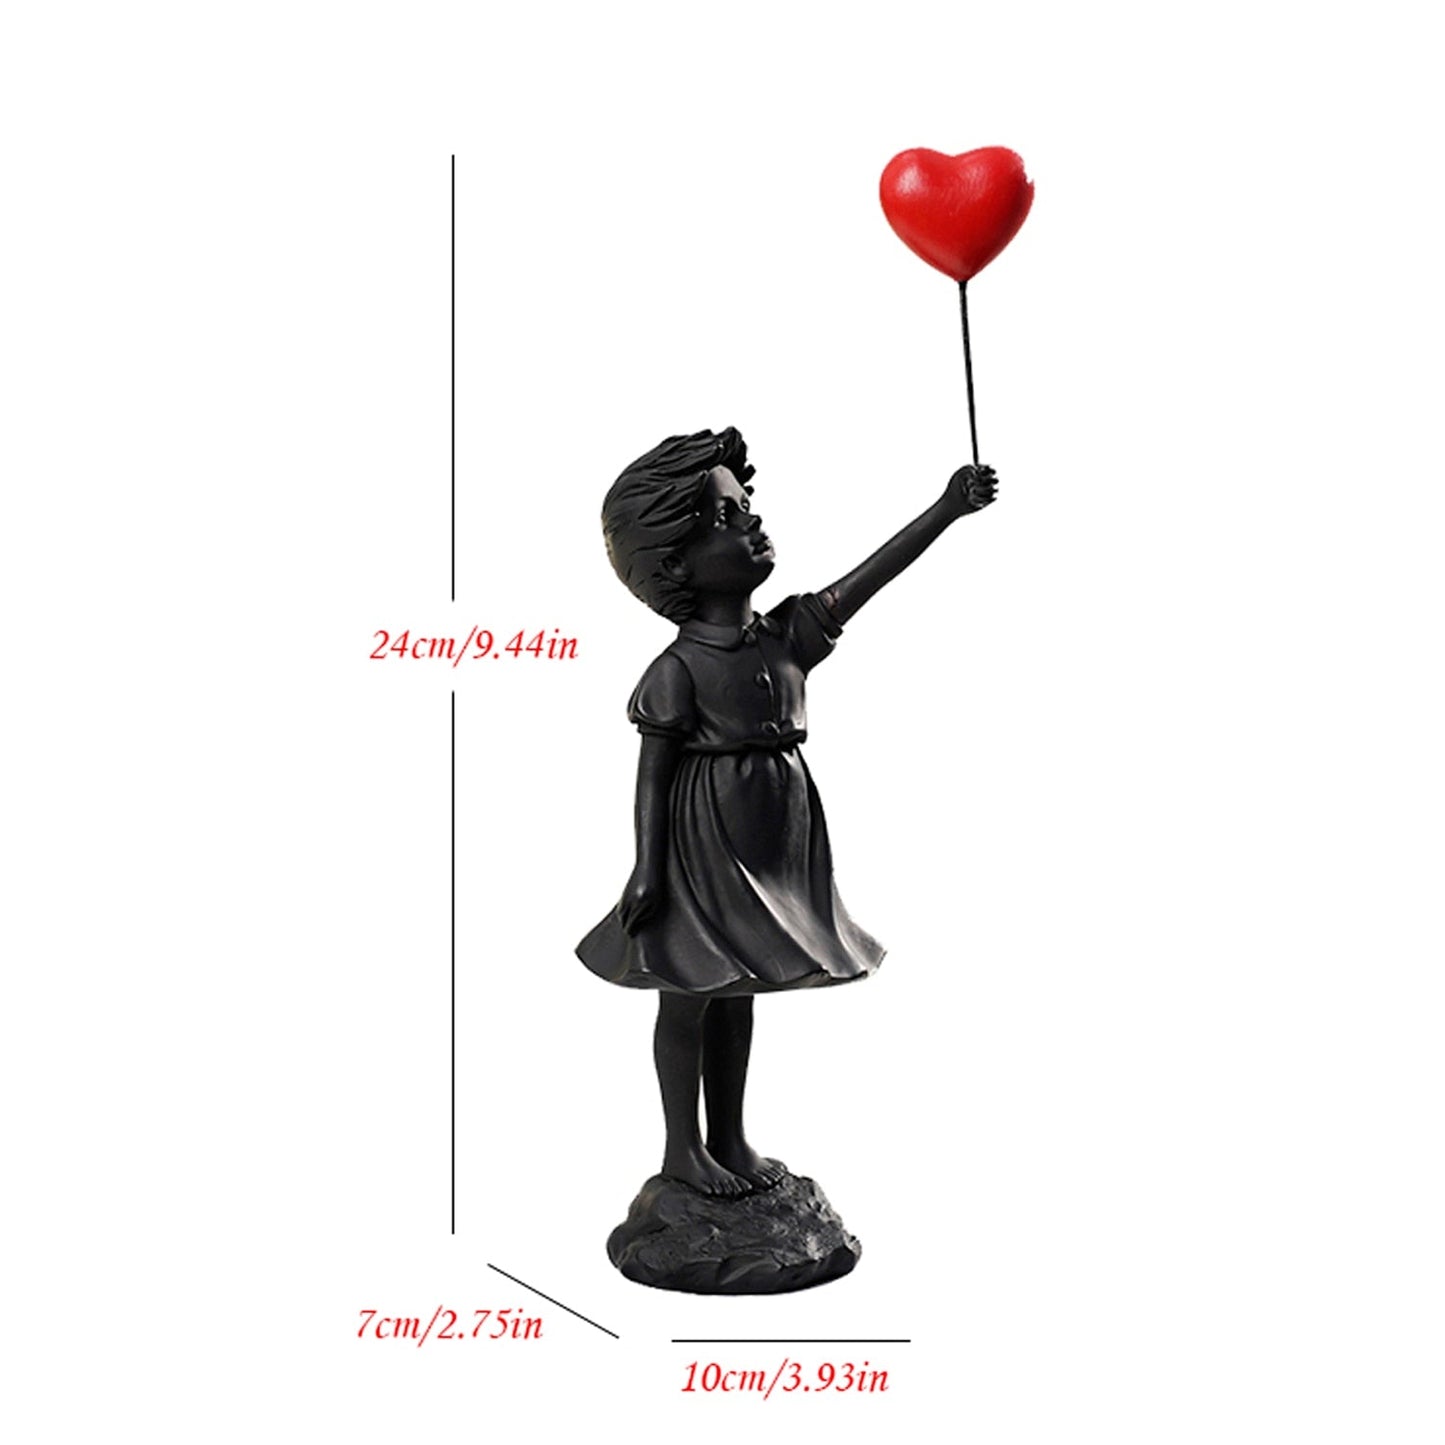 Flying Ballon Girl Figurine, Banksy Home Decor Modern Art Sculpture, Resin Figure Craft Ornament, Collectible Statue